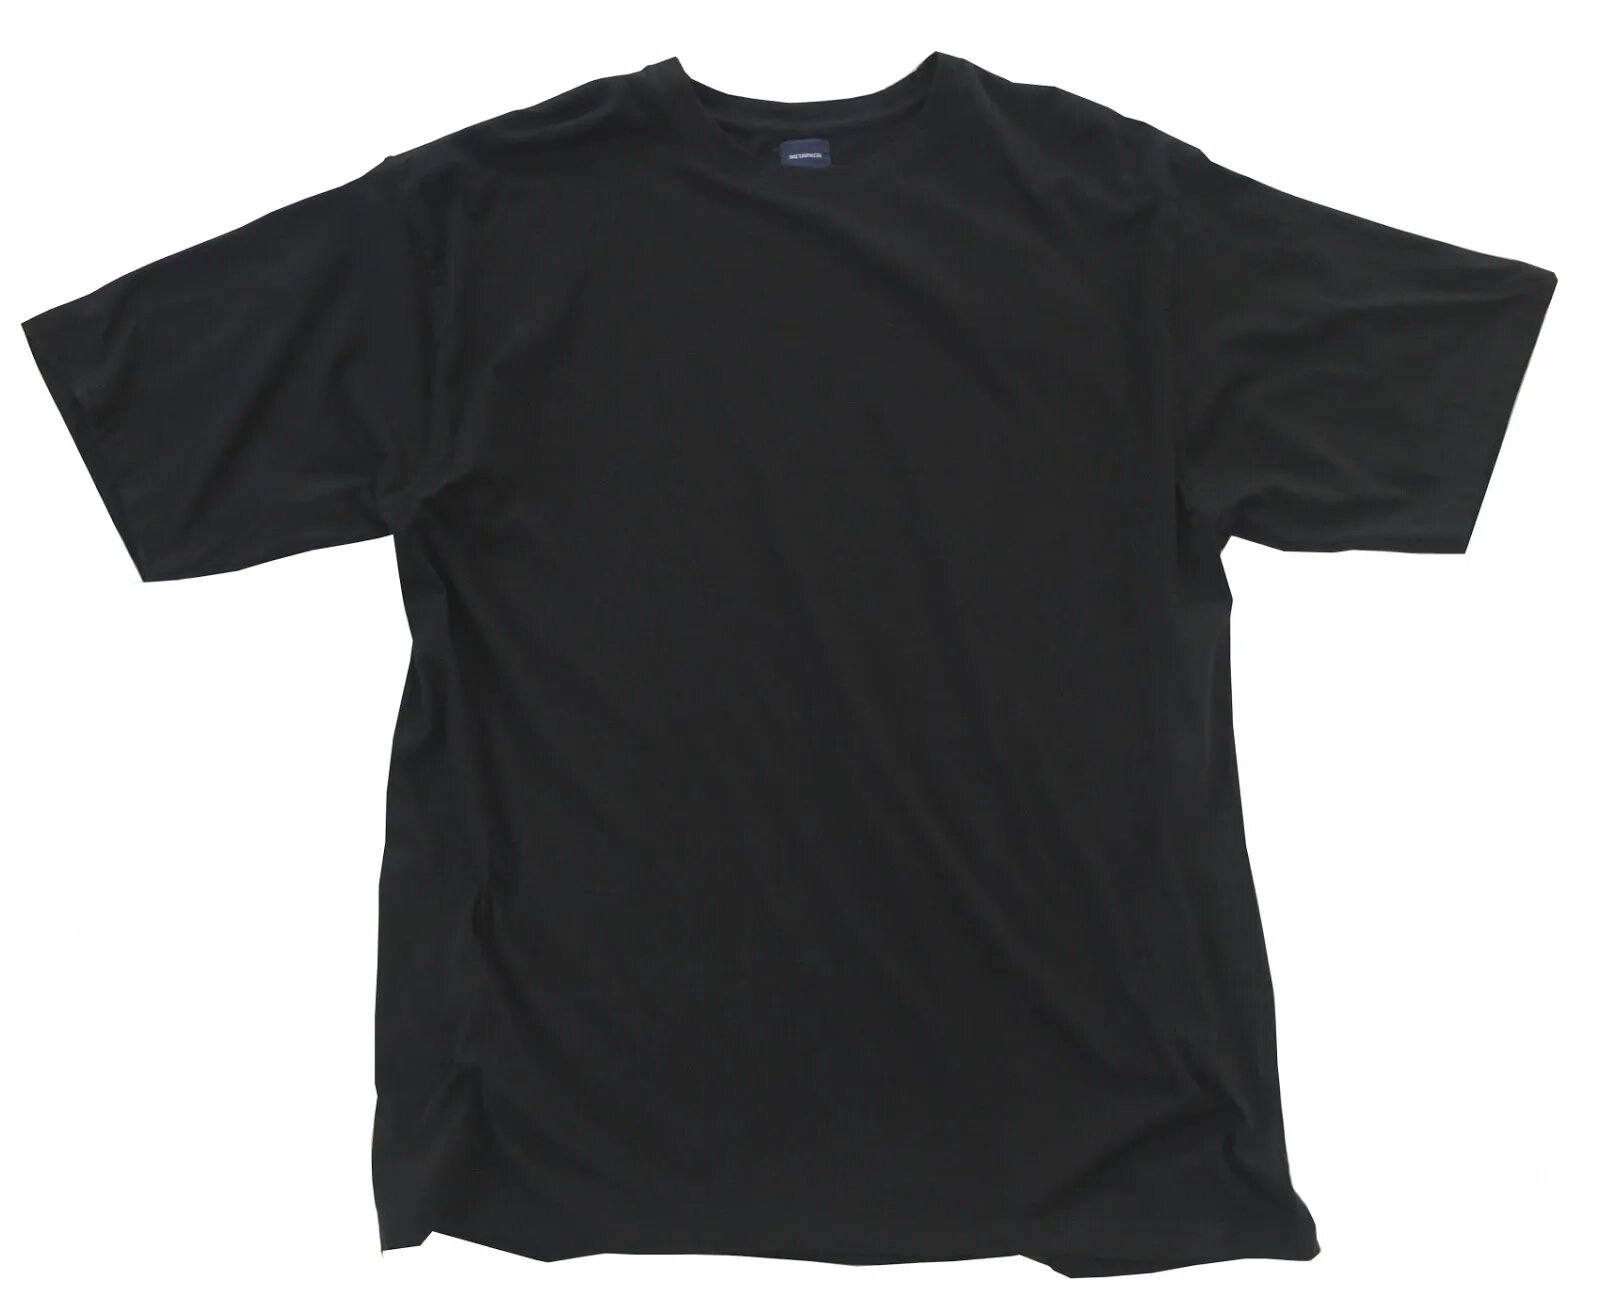 Мятая черная футболка. Футболка черная мужская. Черная футболка без надписей. Базовая черная футболка.